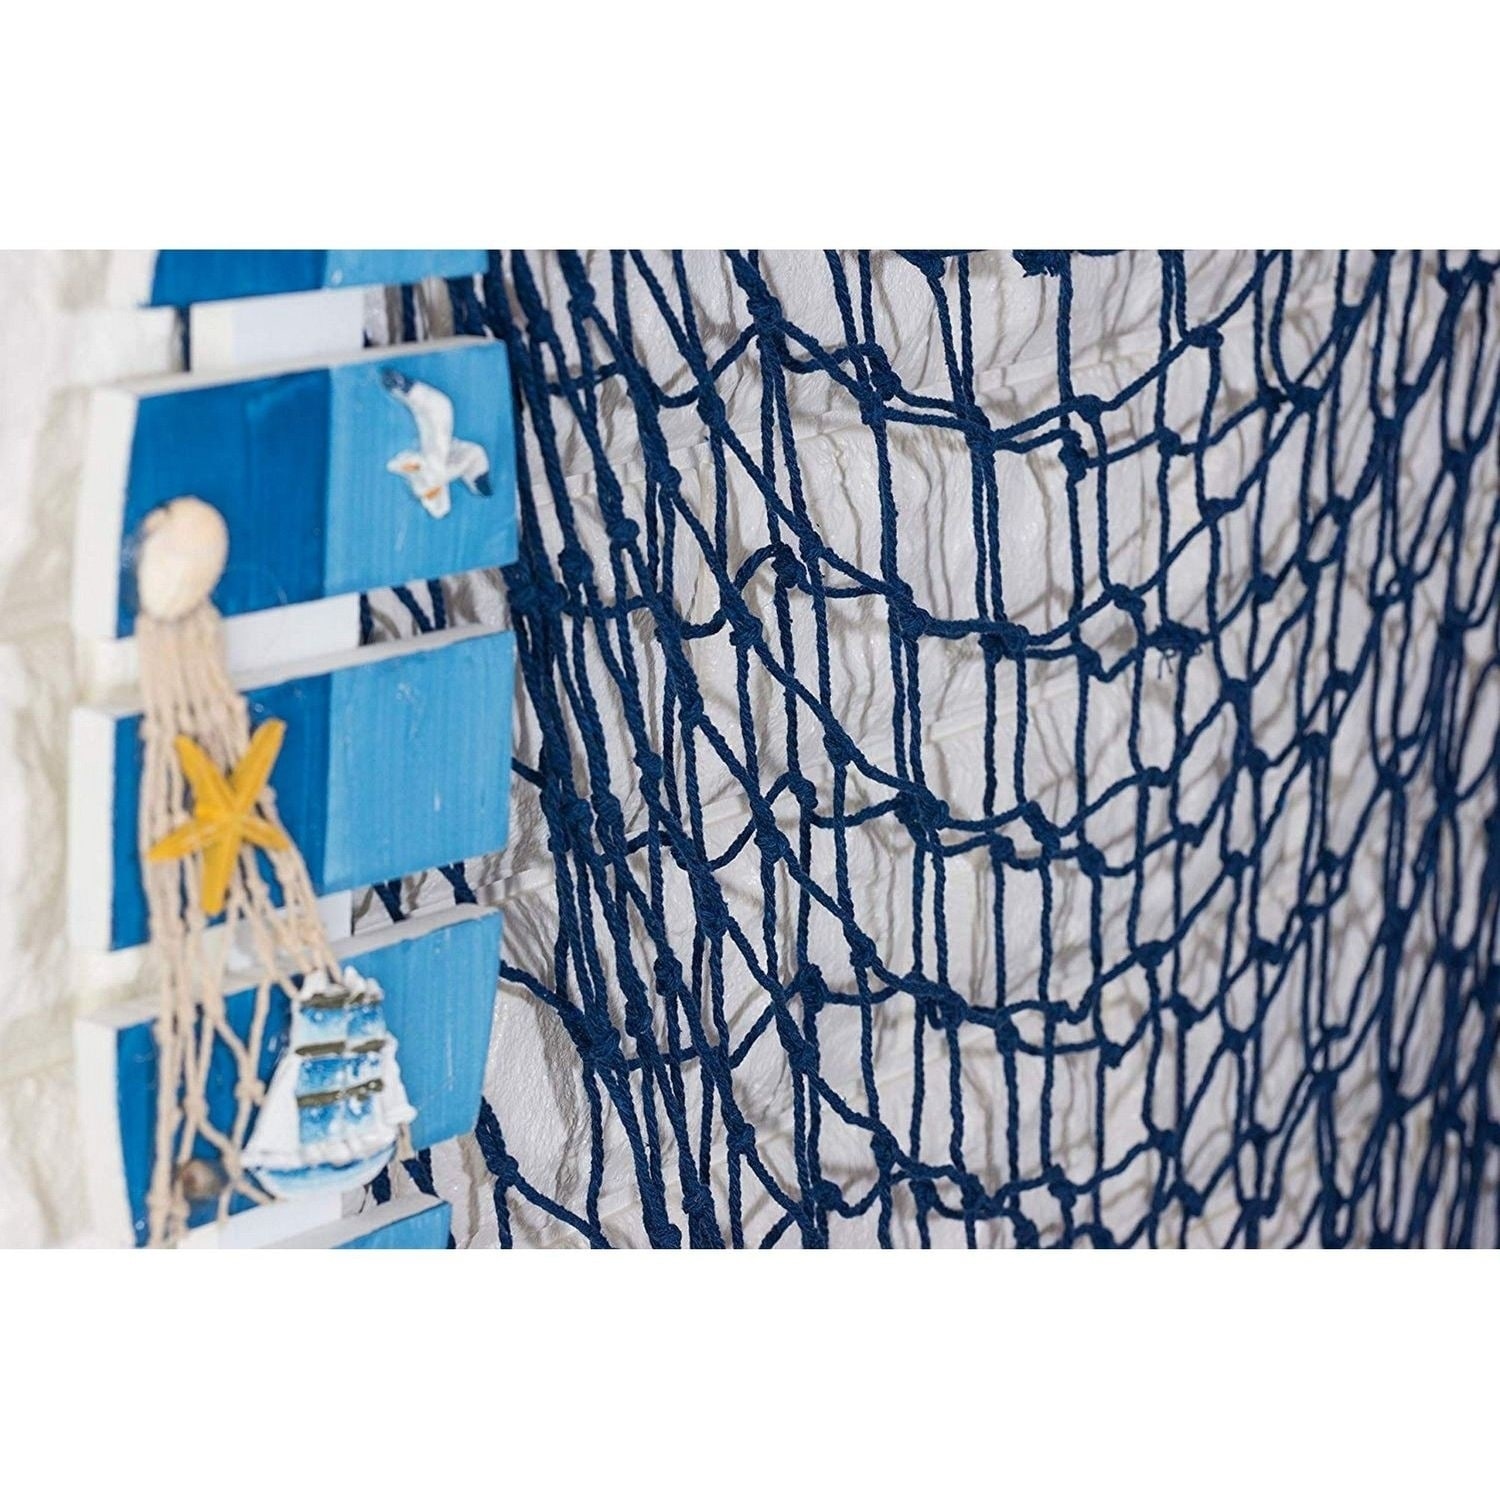 Fraigo Fish Net Decoration Party Decor – Dark Blue Cotton Netting